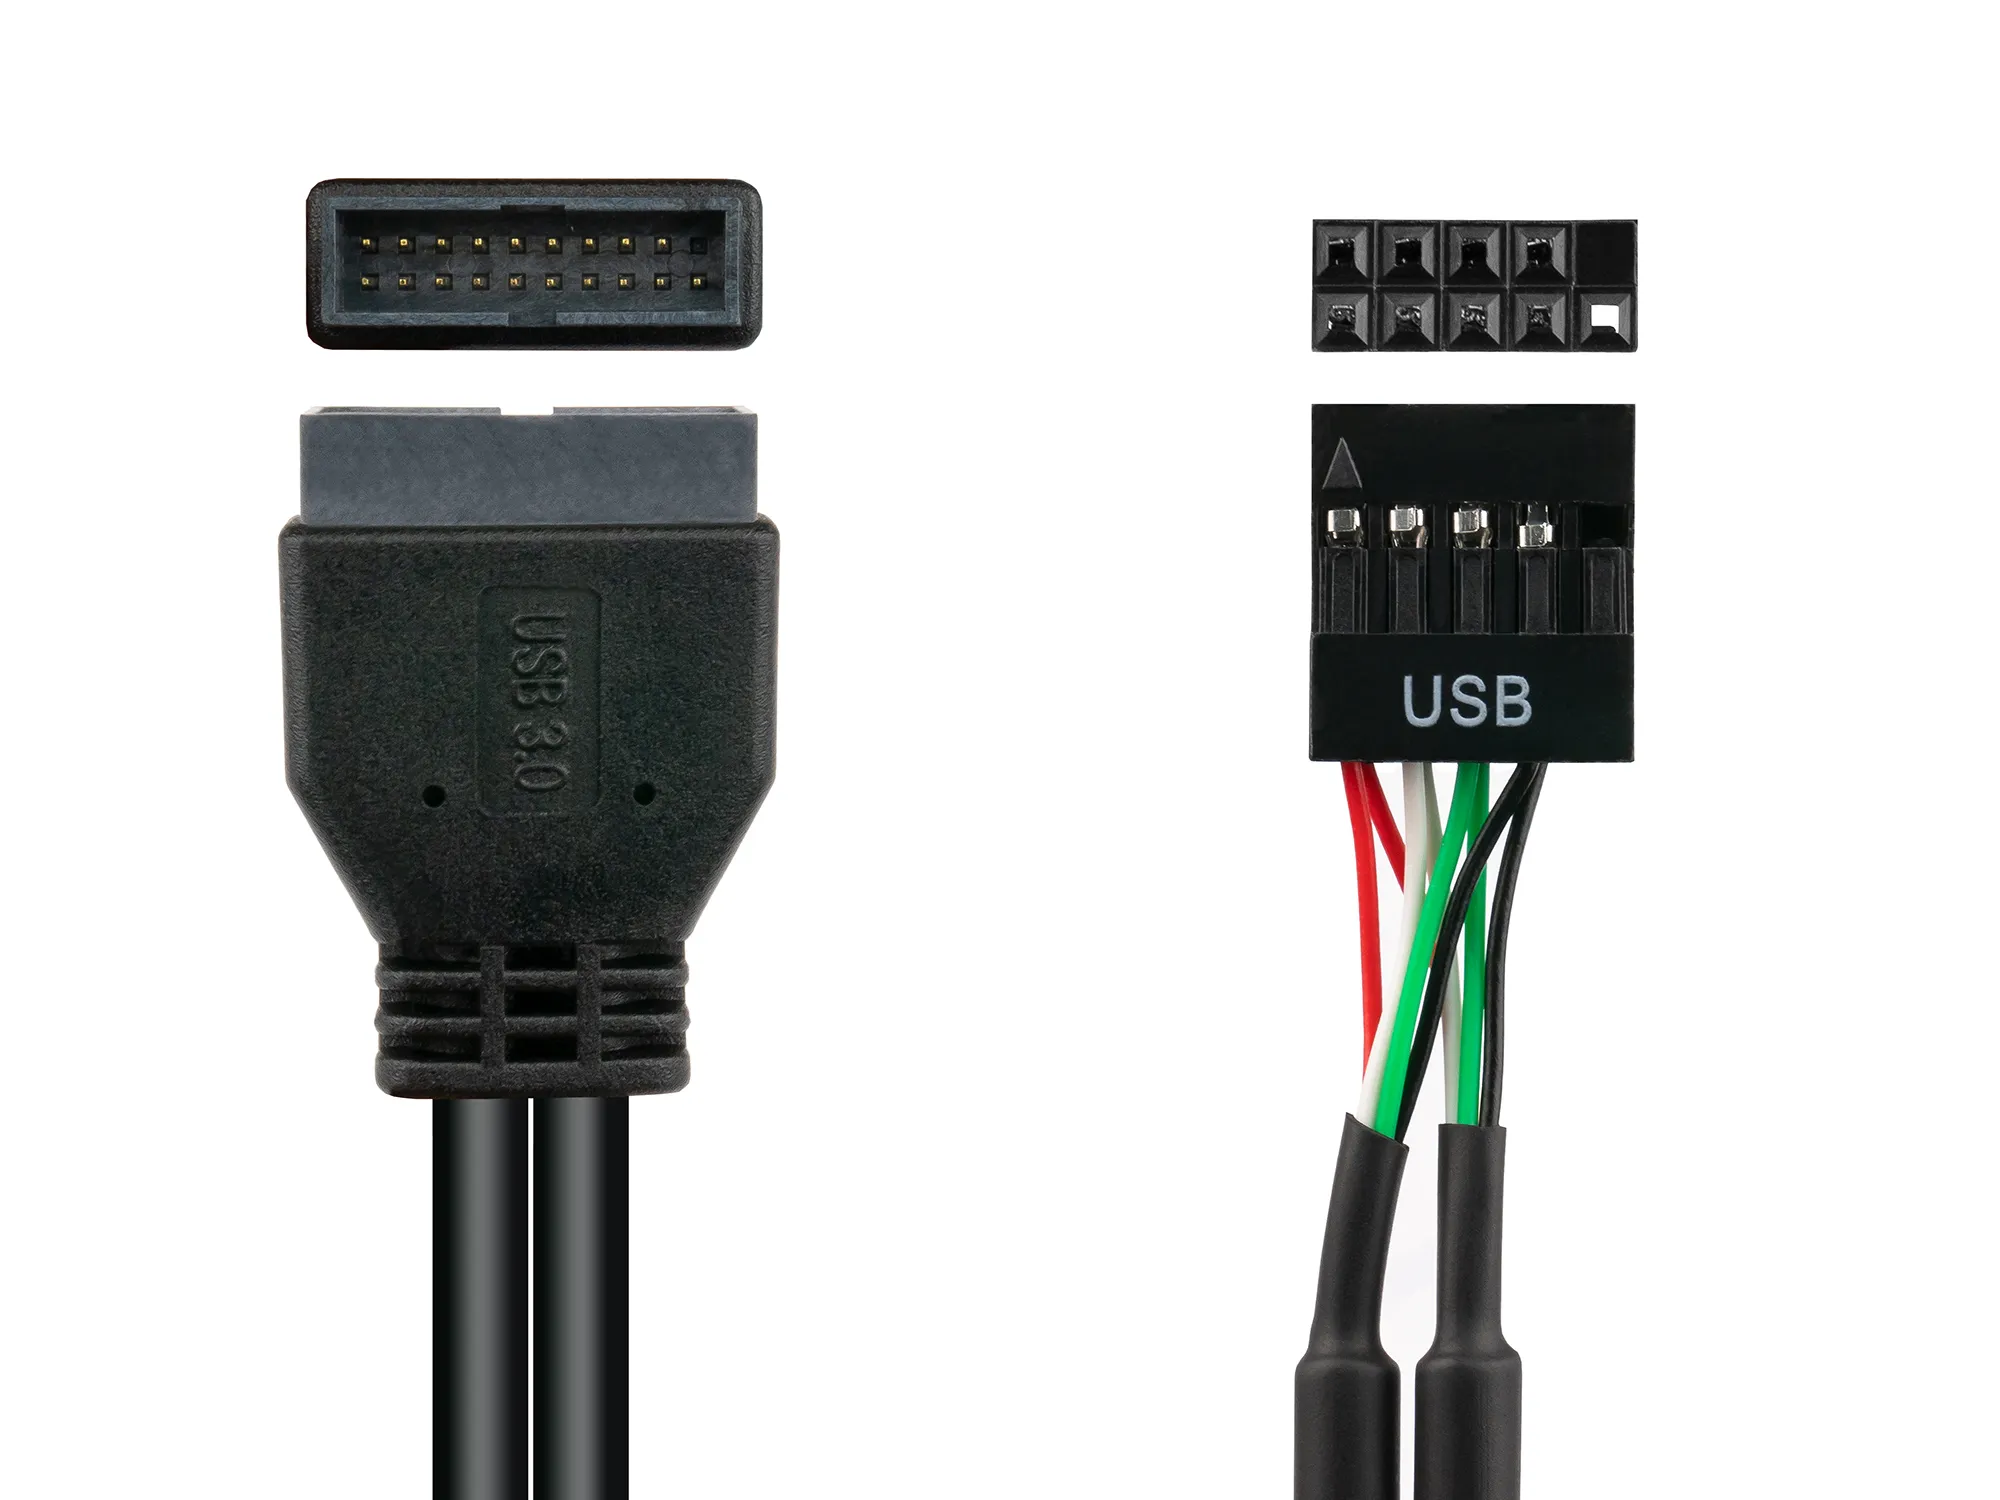 Adapter intern USB 3.0 Pin-Header Stecker an USB 2.0 Pin-Header Buchse, schwarz, 0,6m, Good Connecti